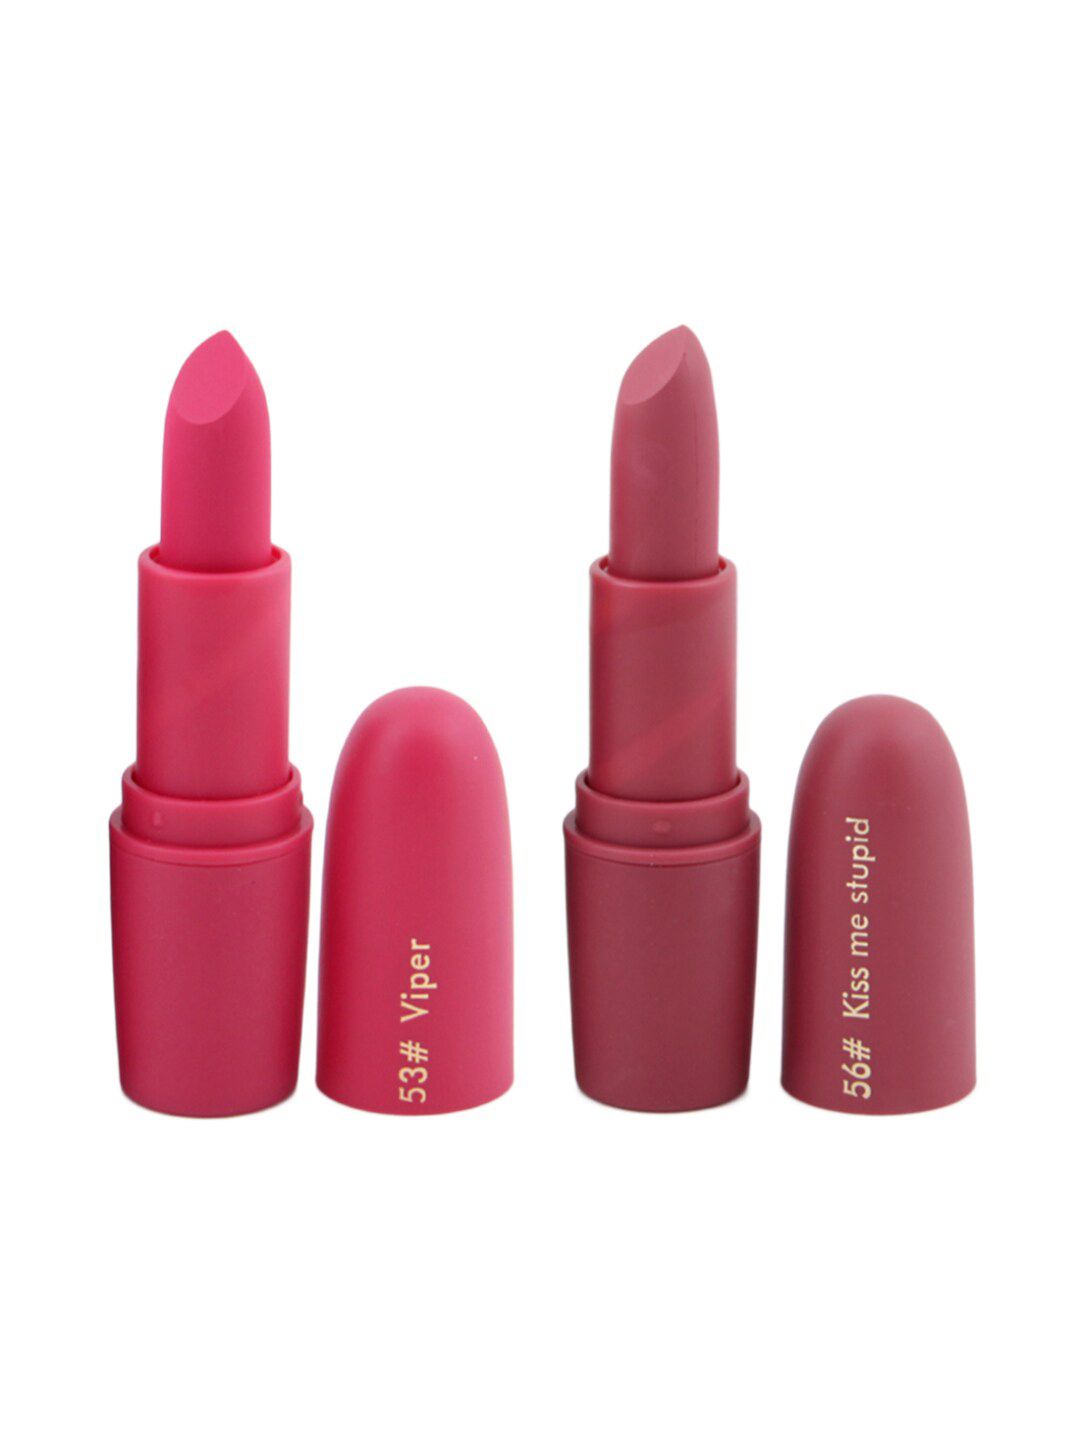 MISS ROSE Professional Make-Up Set of 2 Matte Lipsticks - Viper 53 & Kiss Me Stupid 56 Price in India